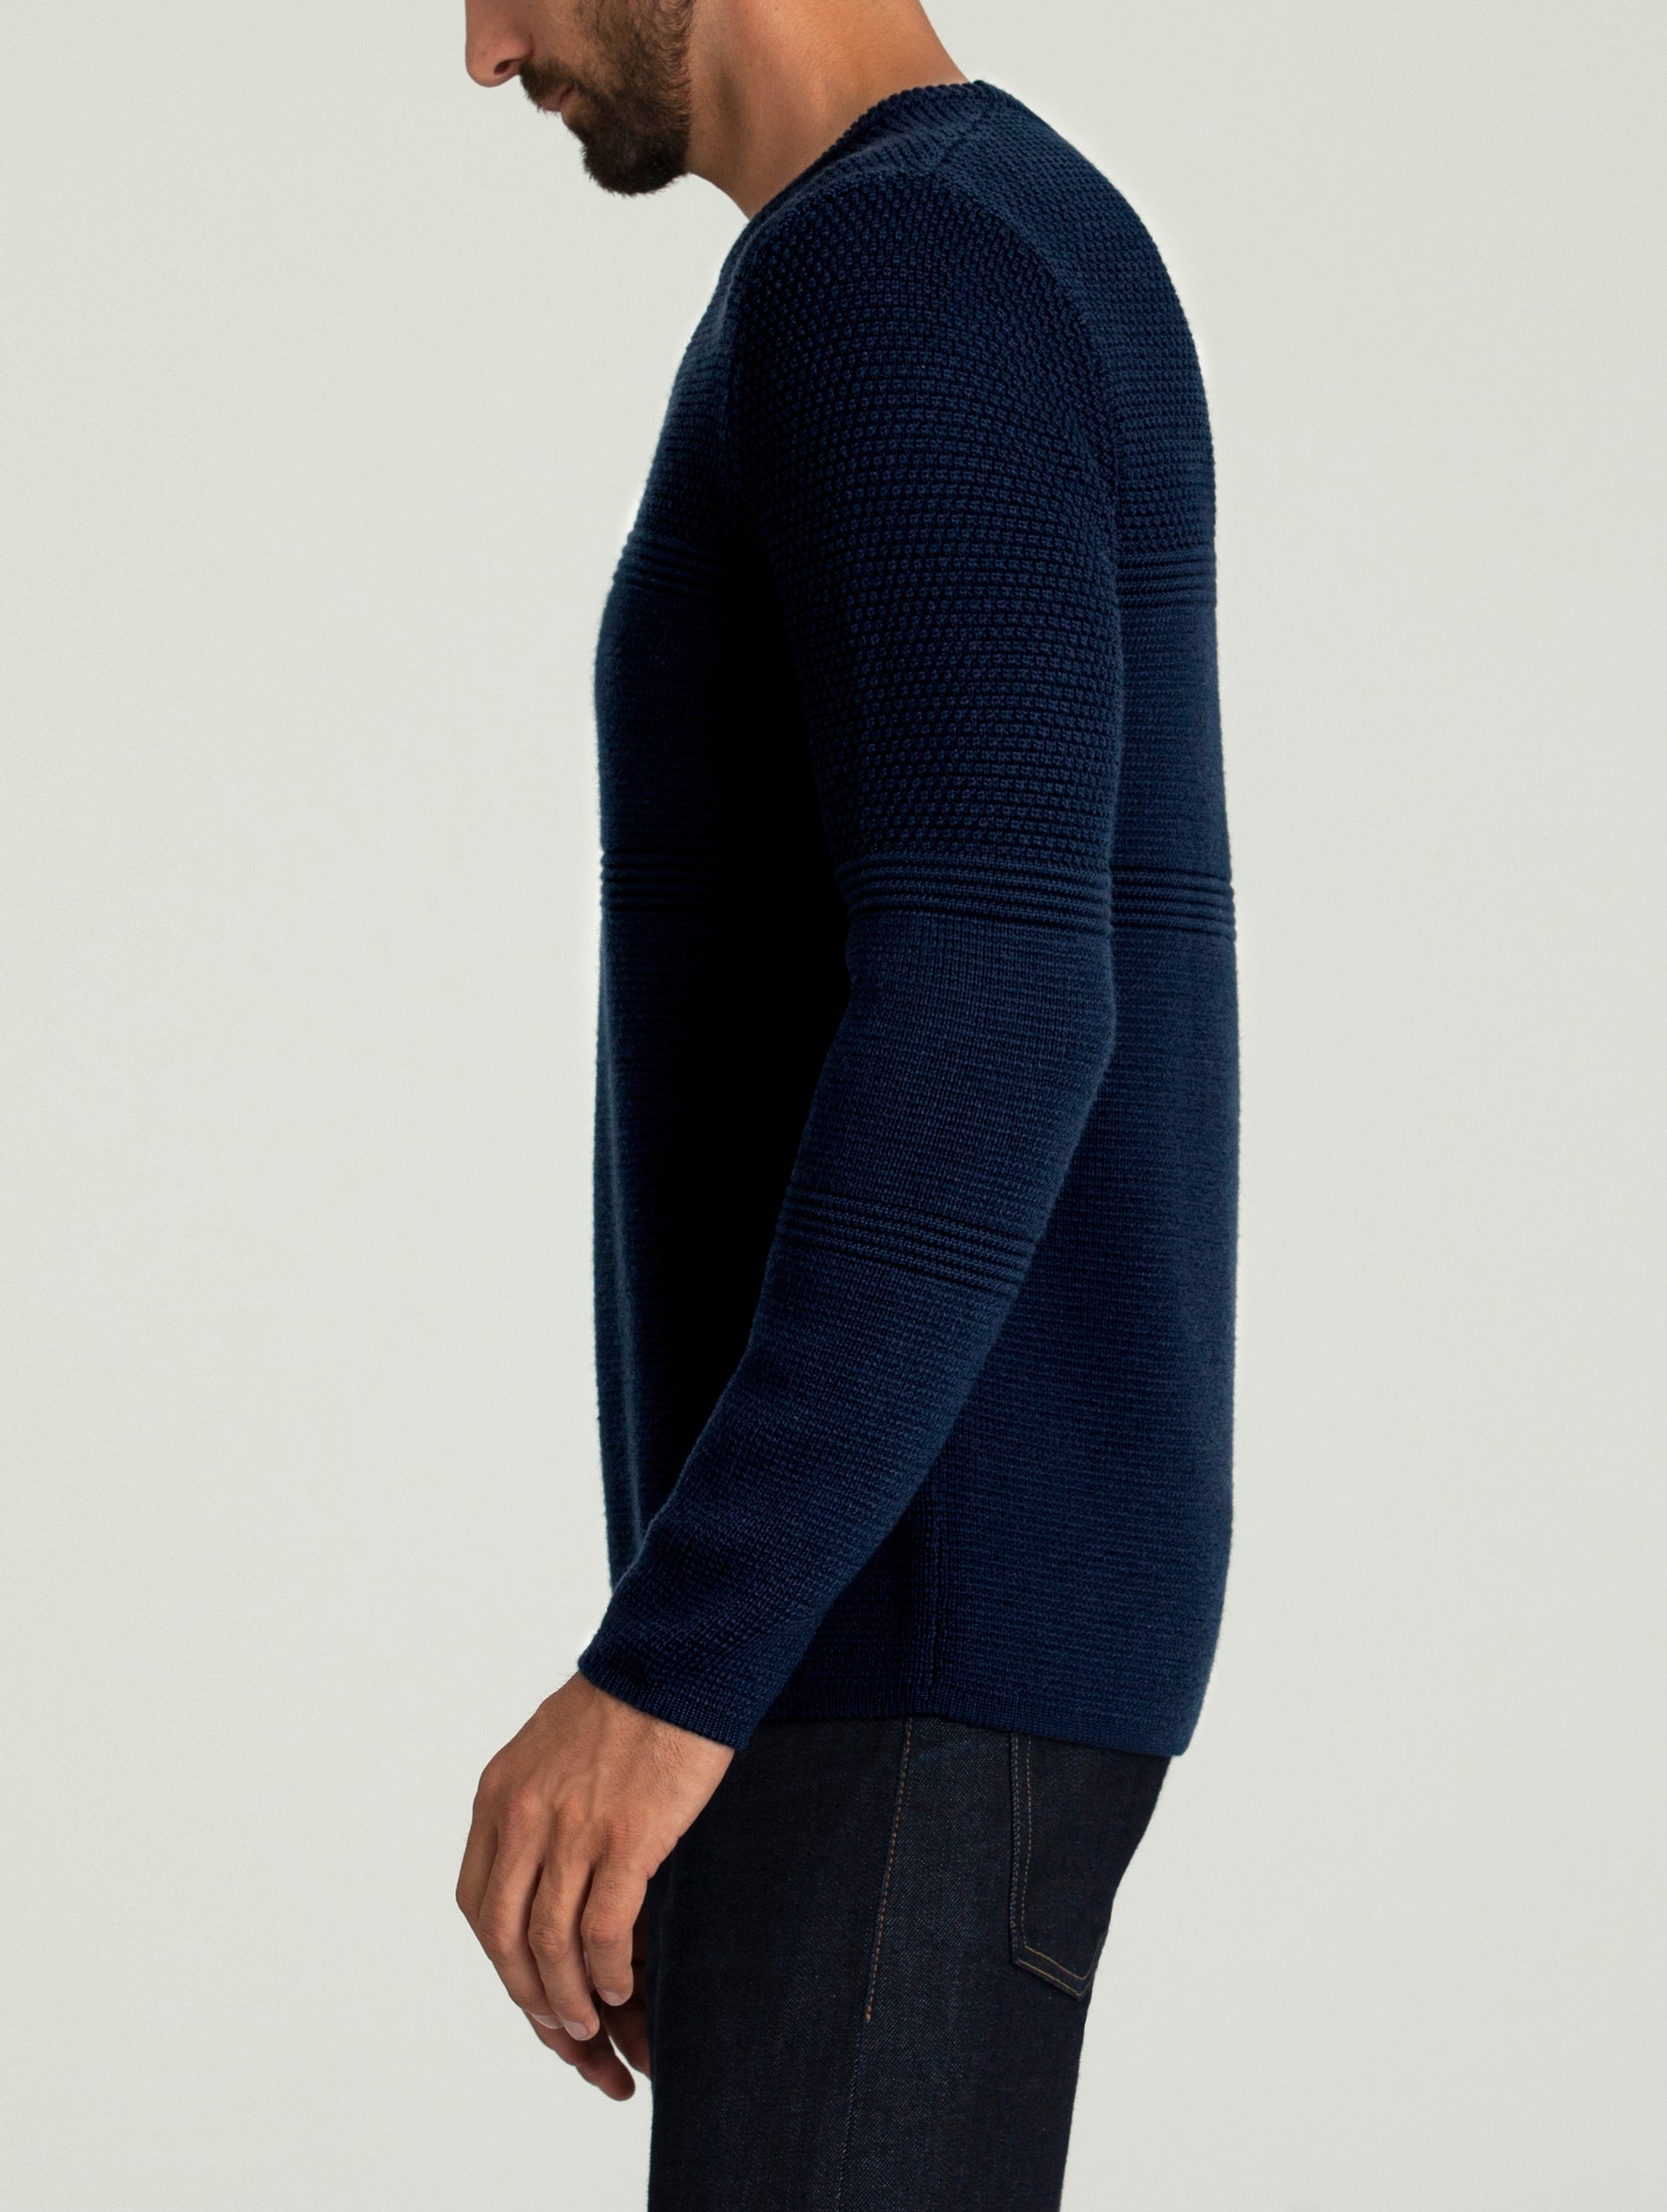 man wearing dark blue sweater